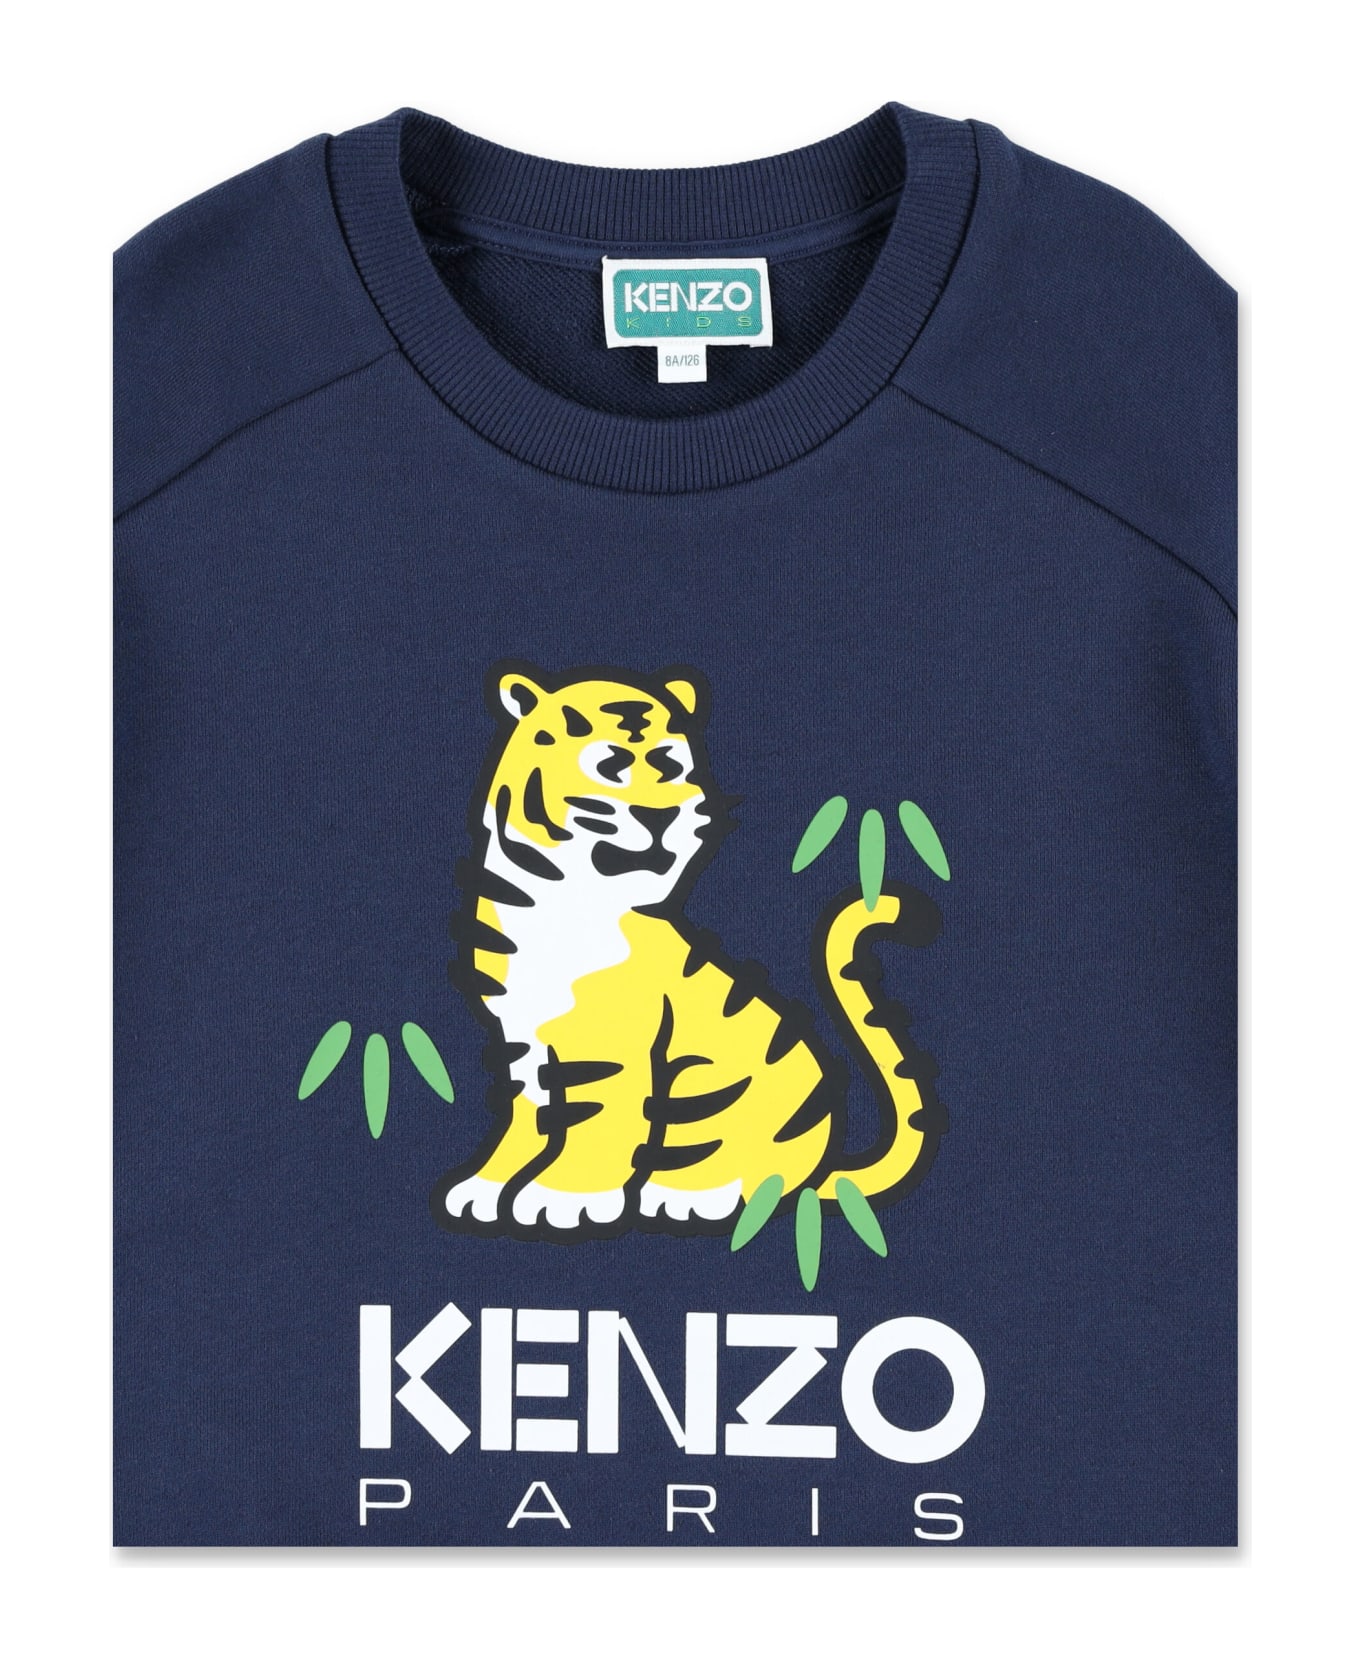 Kenzo Kids Tiger Print Sweatshirt - NAVY